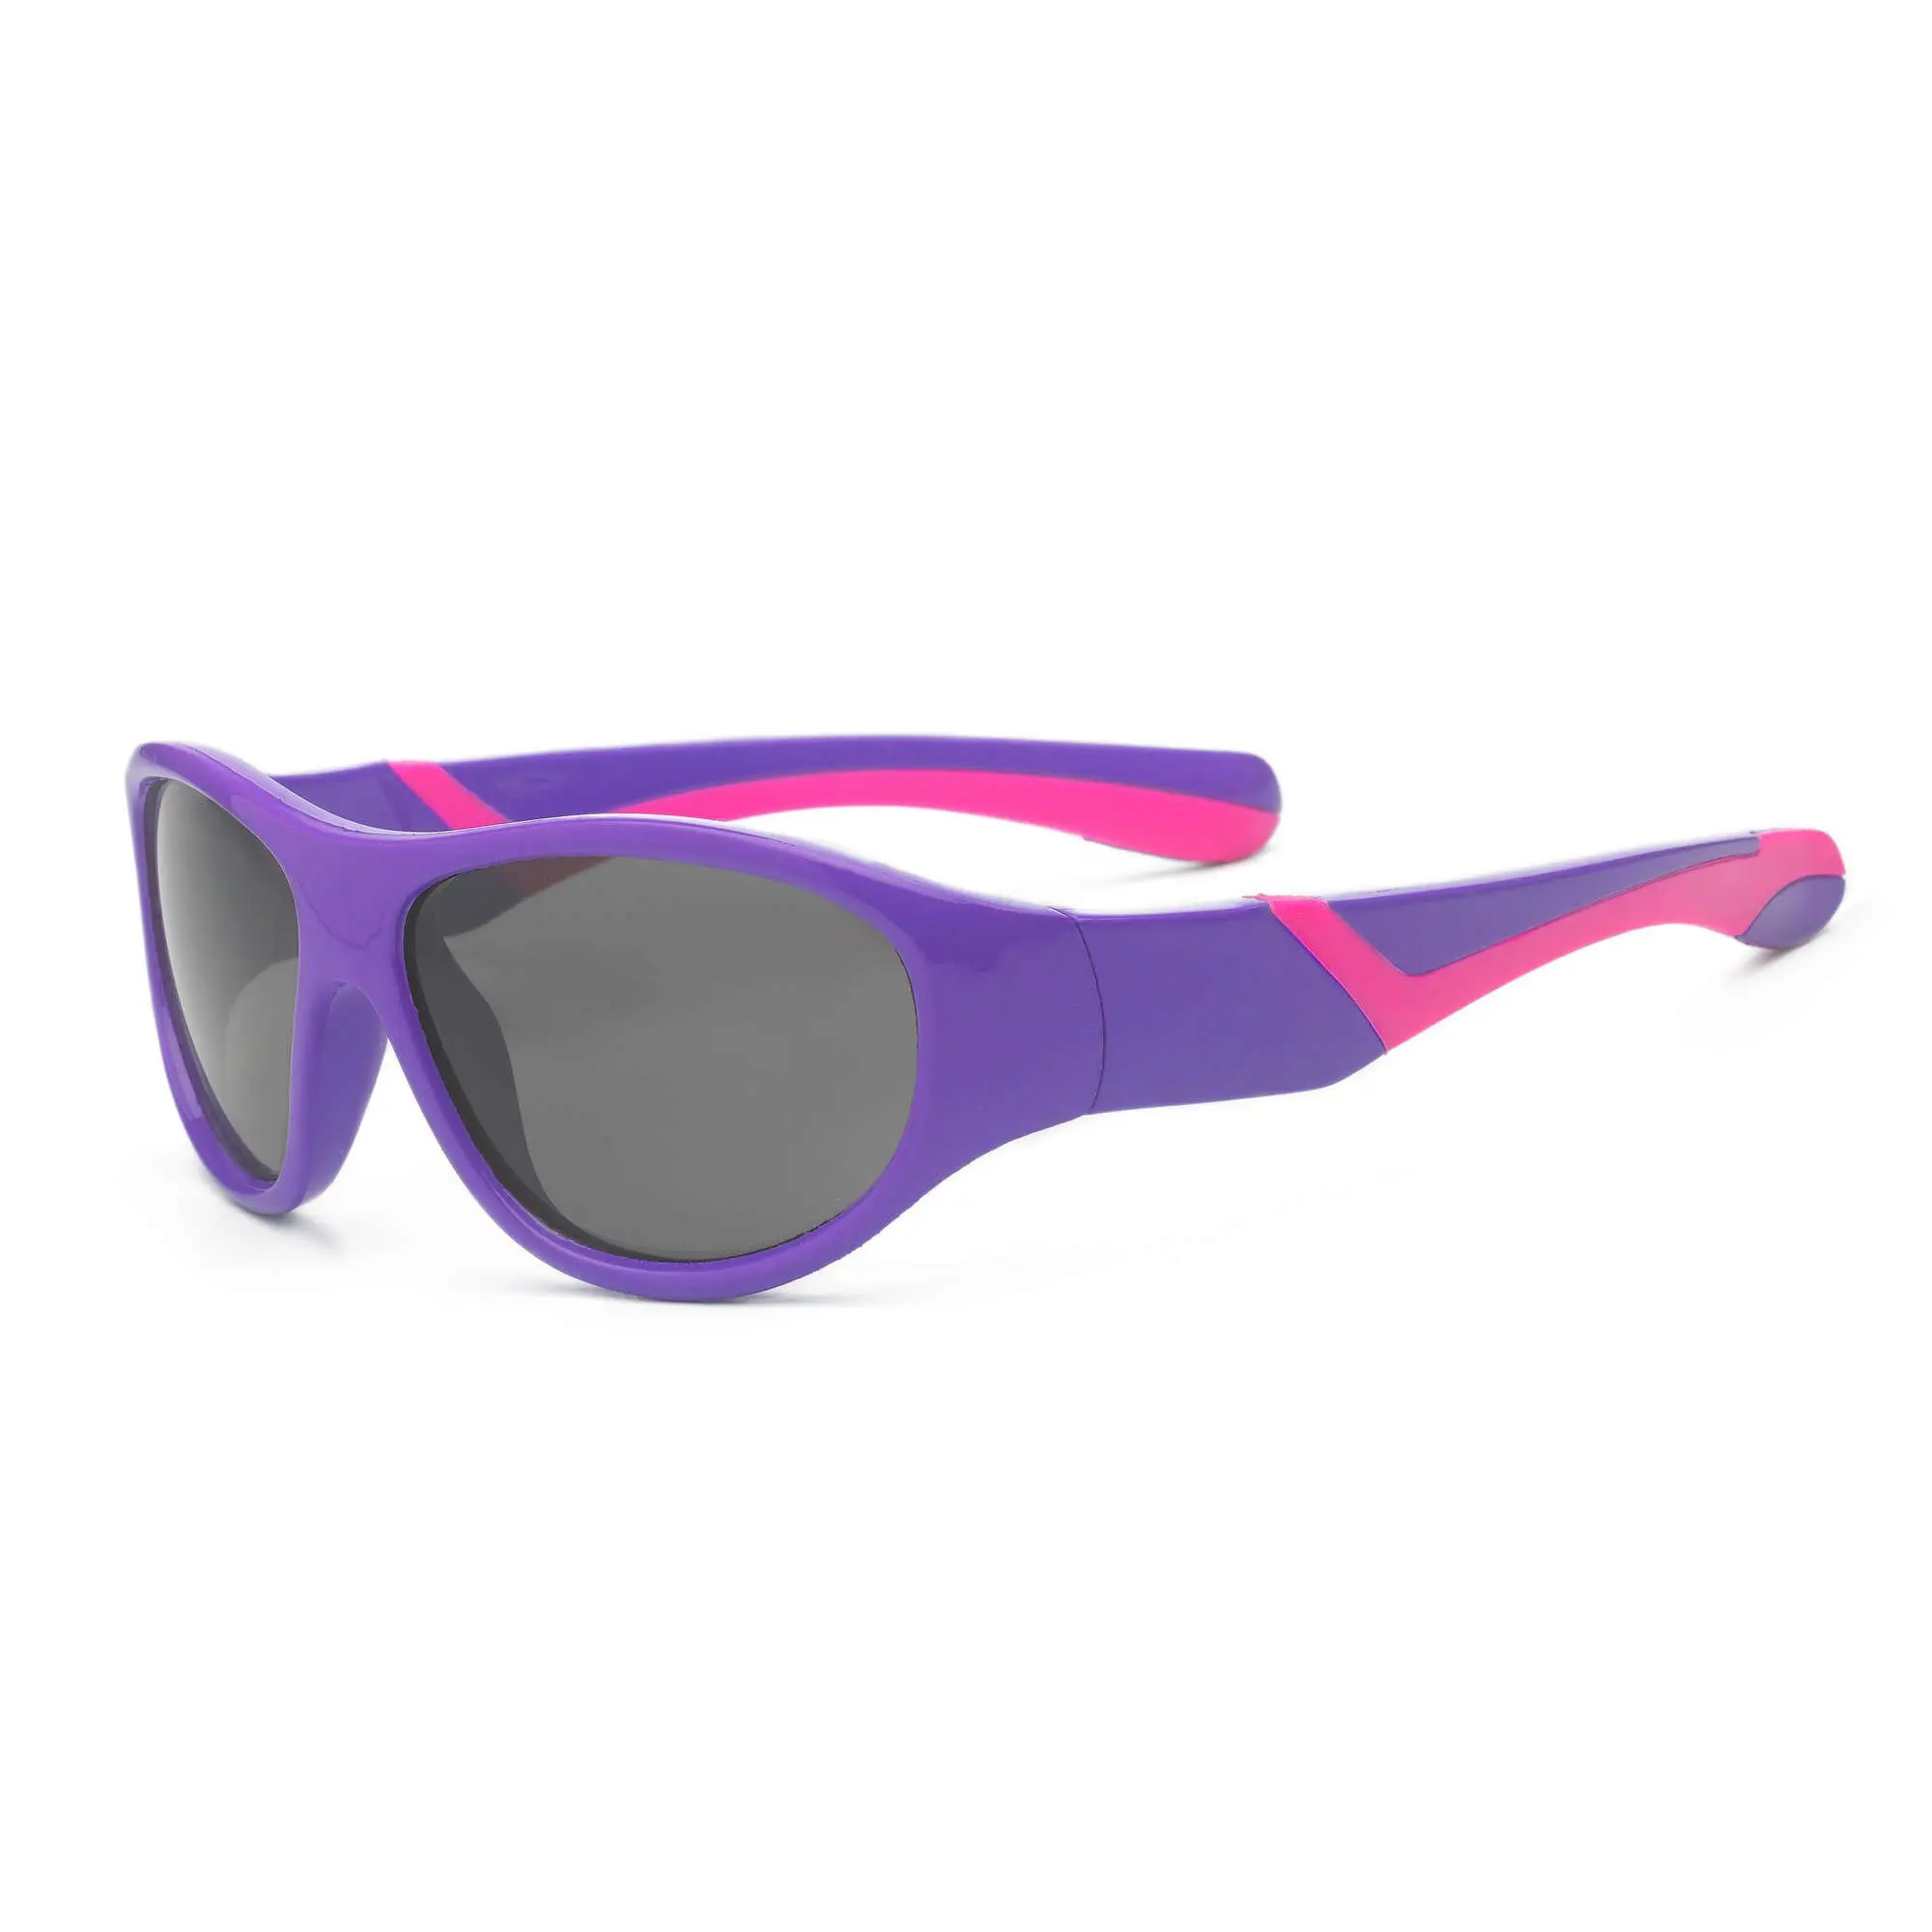 Discover Purple/Pink Sunglasses